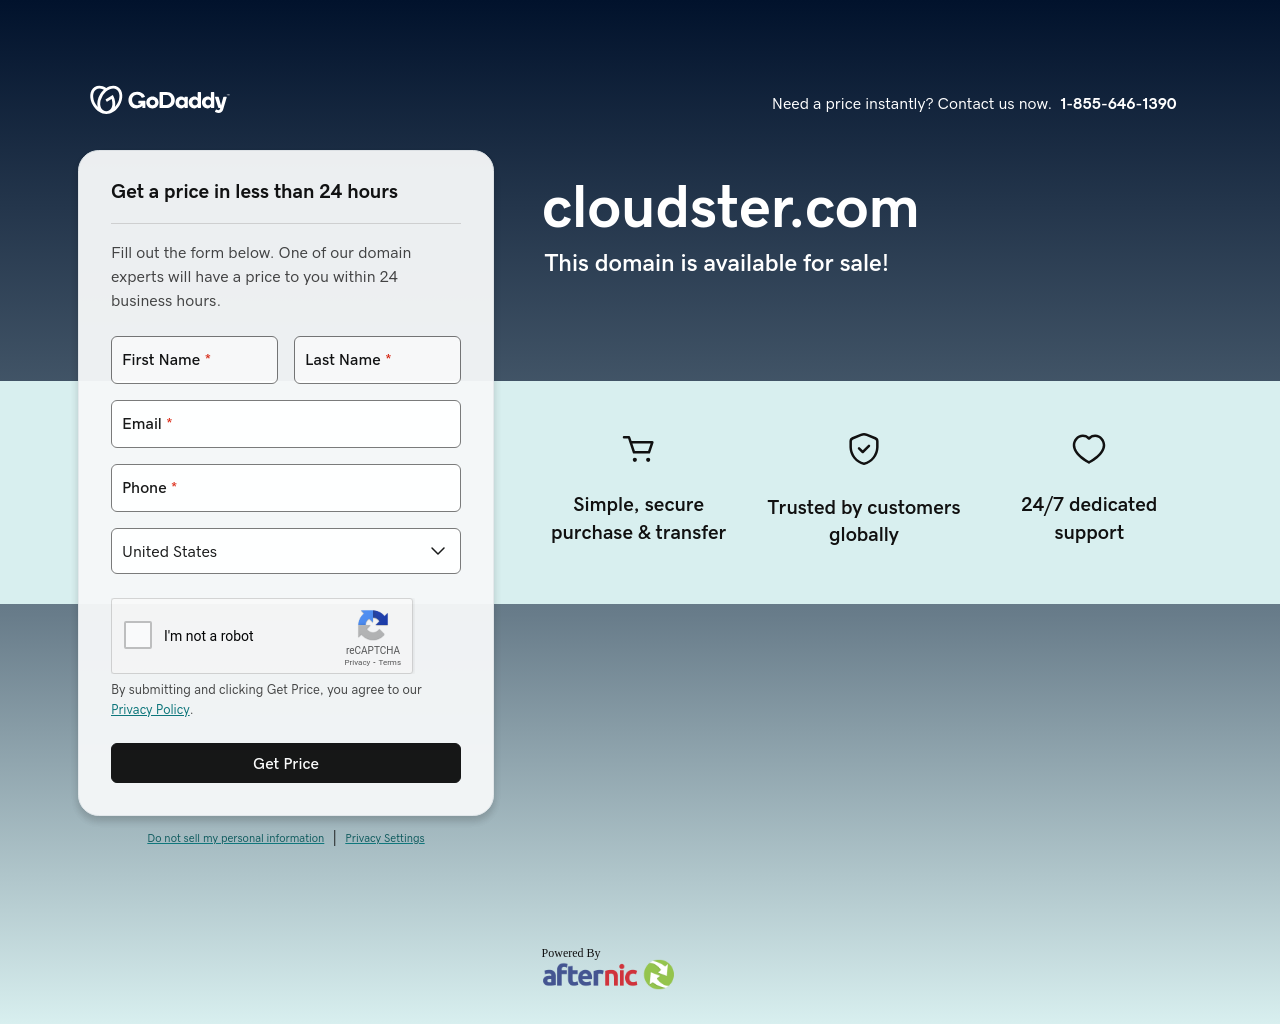 cloudster.com